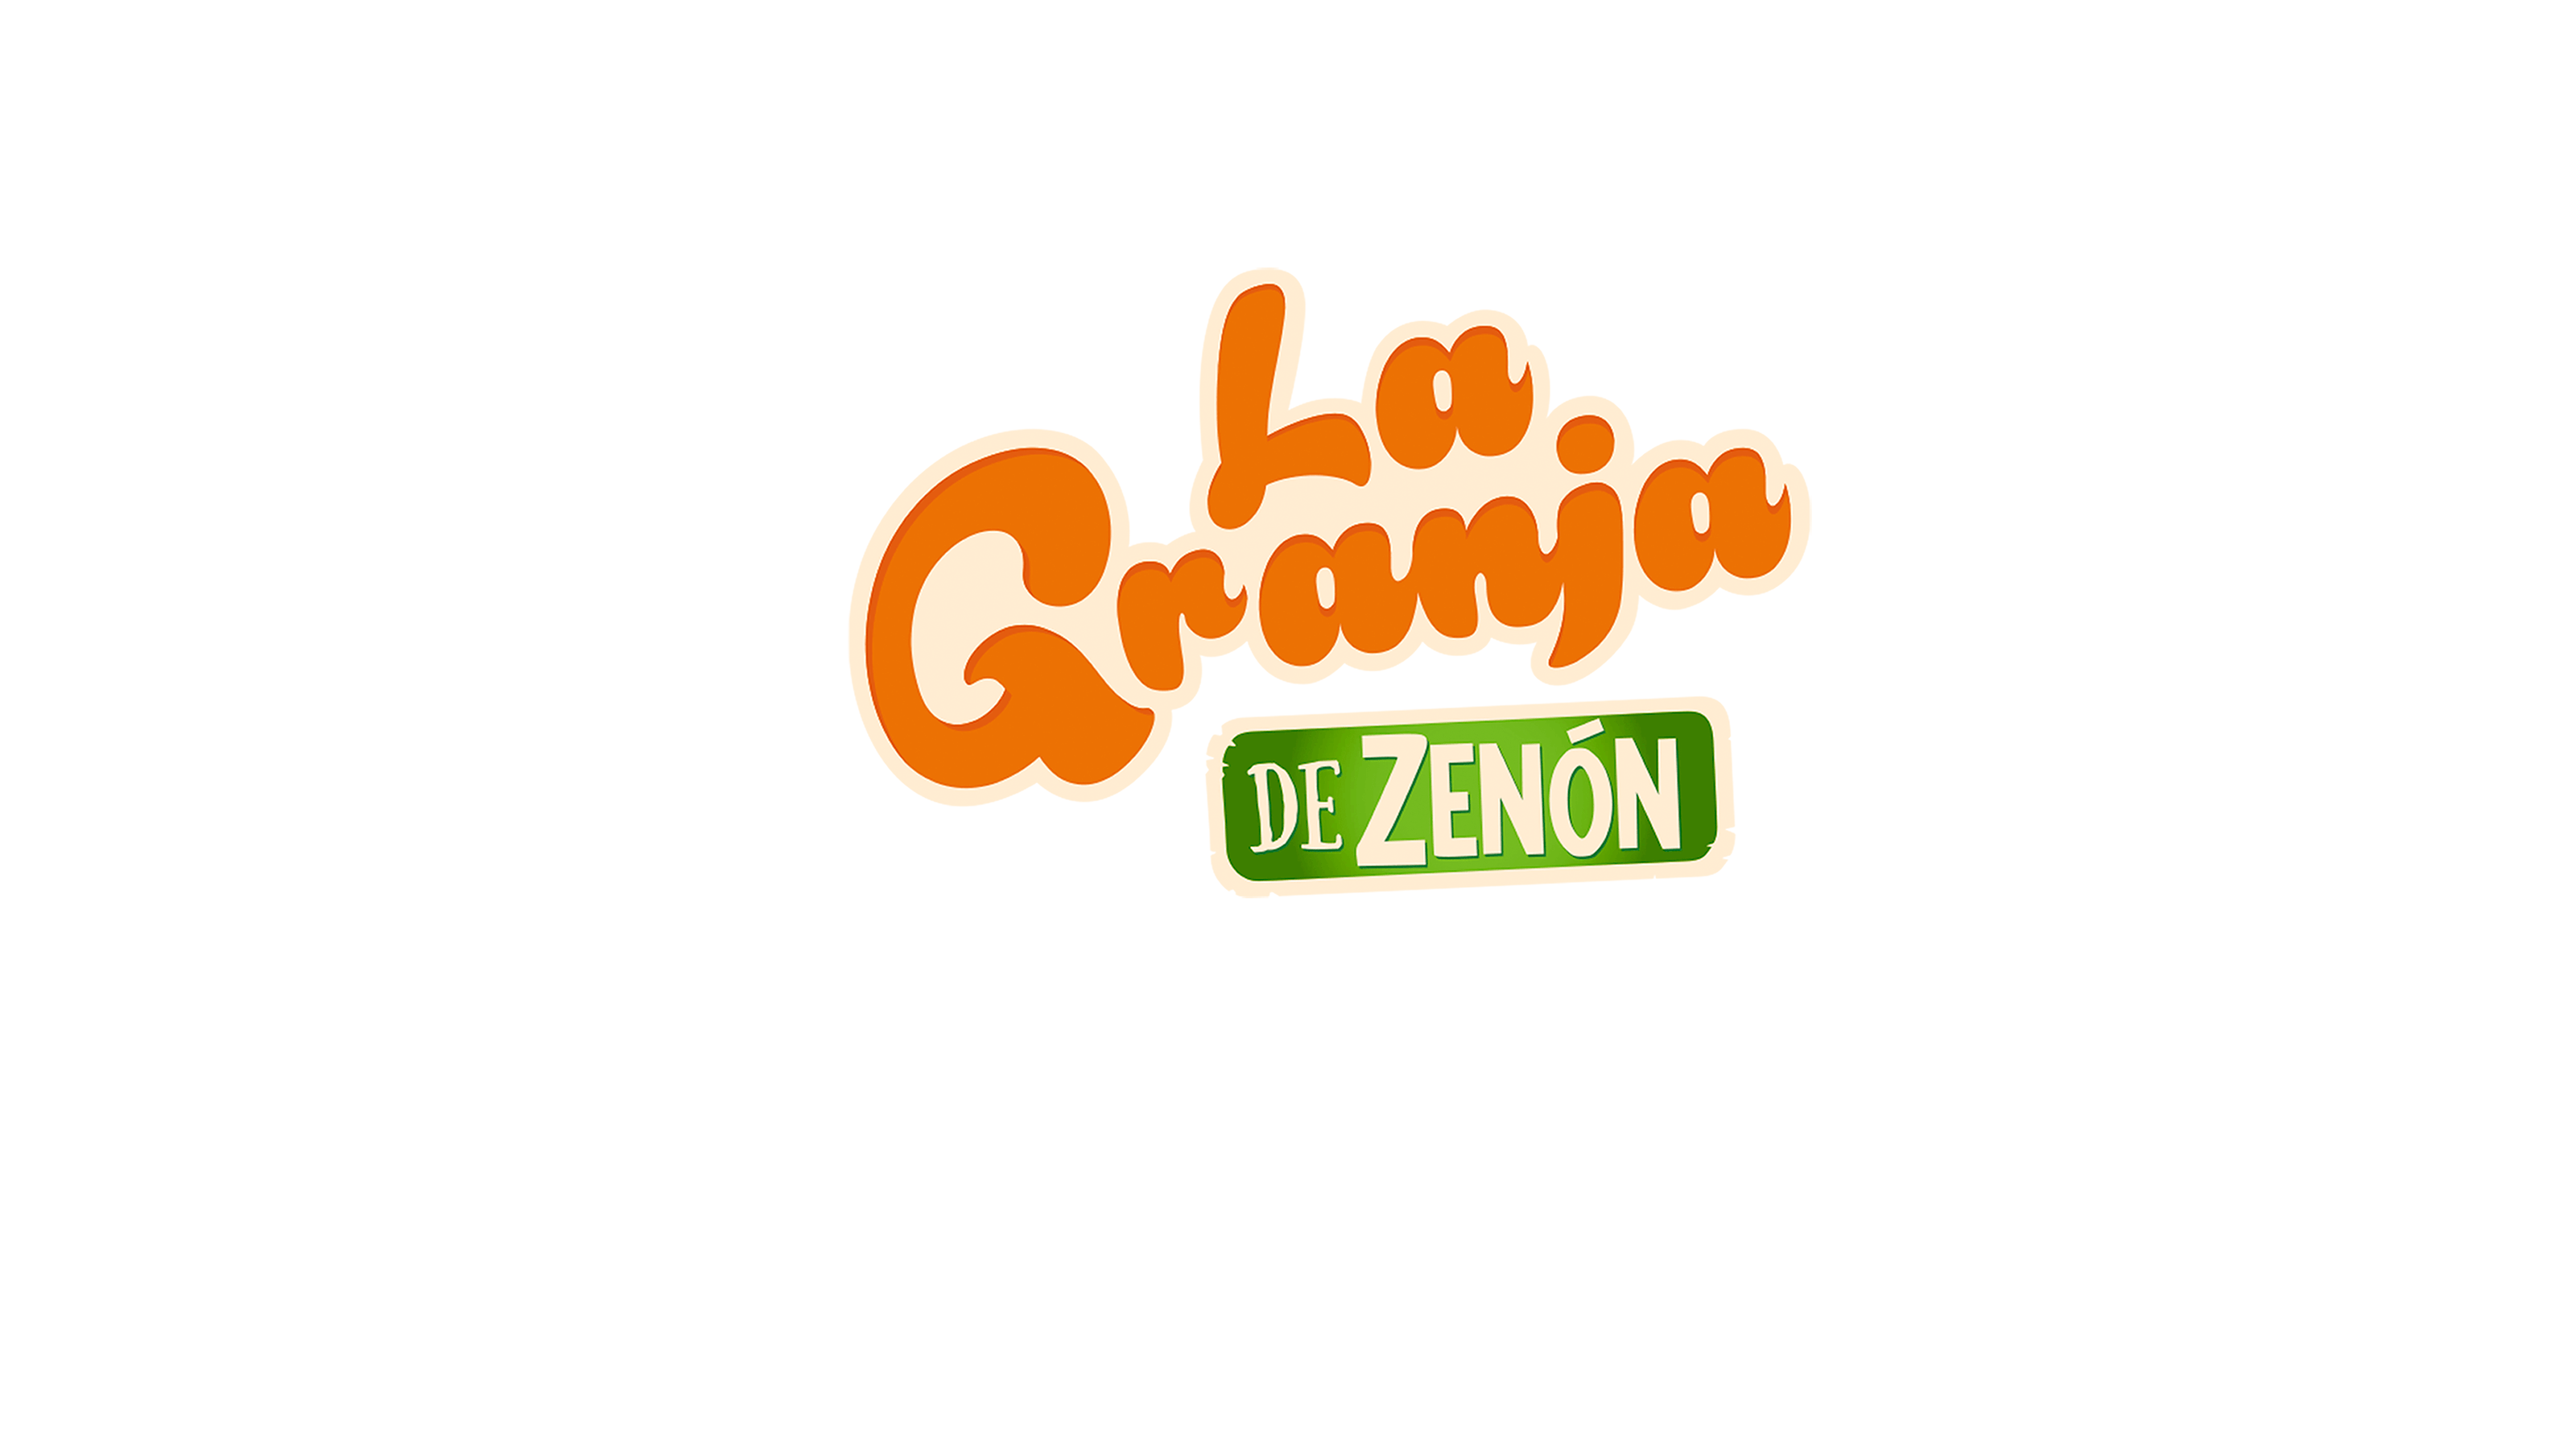 La Granja De Zenon PNG File